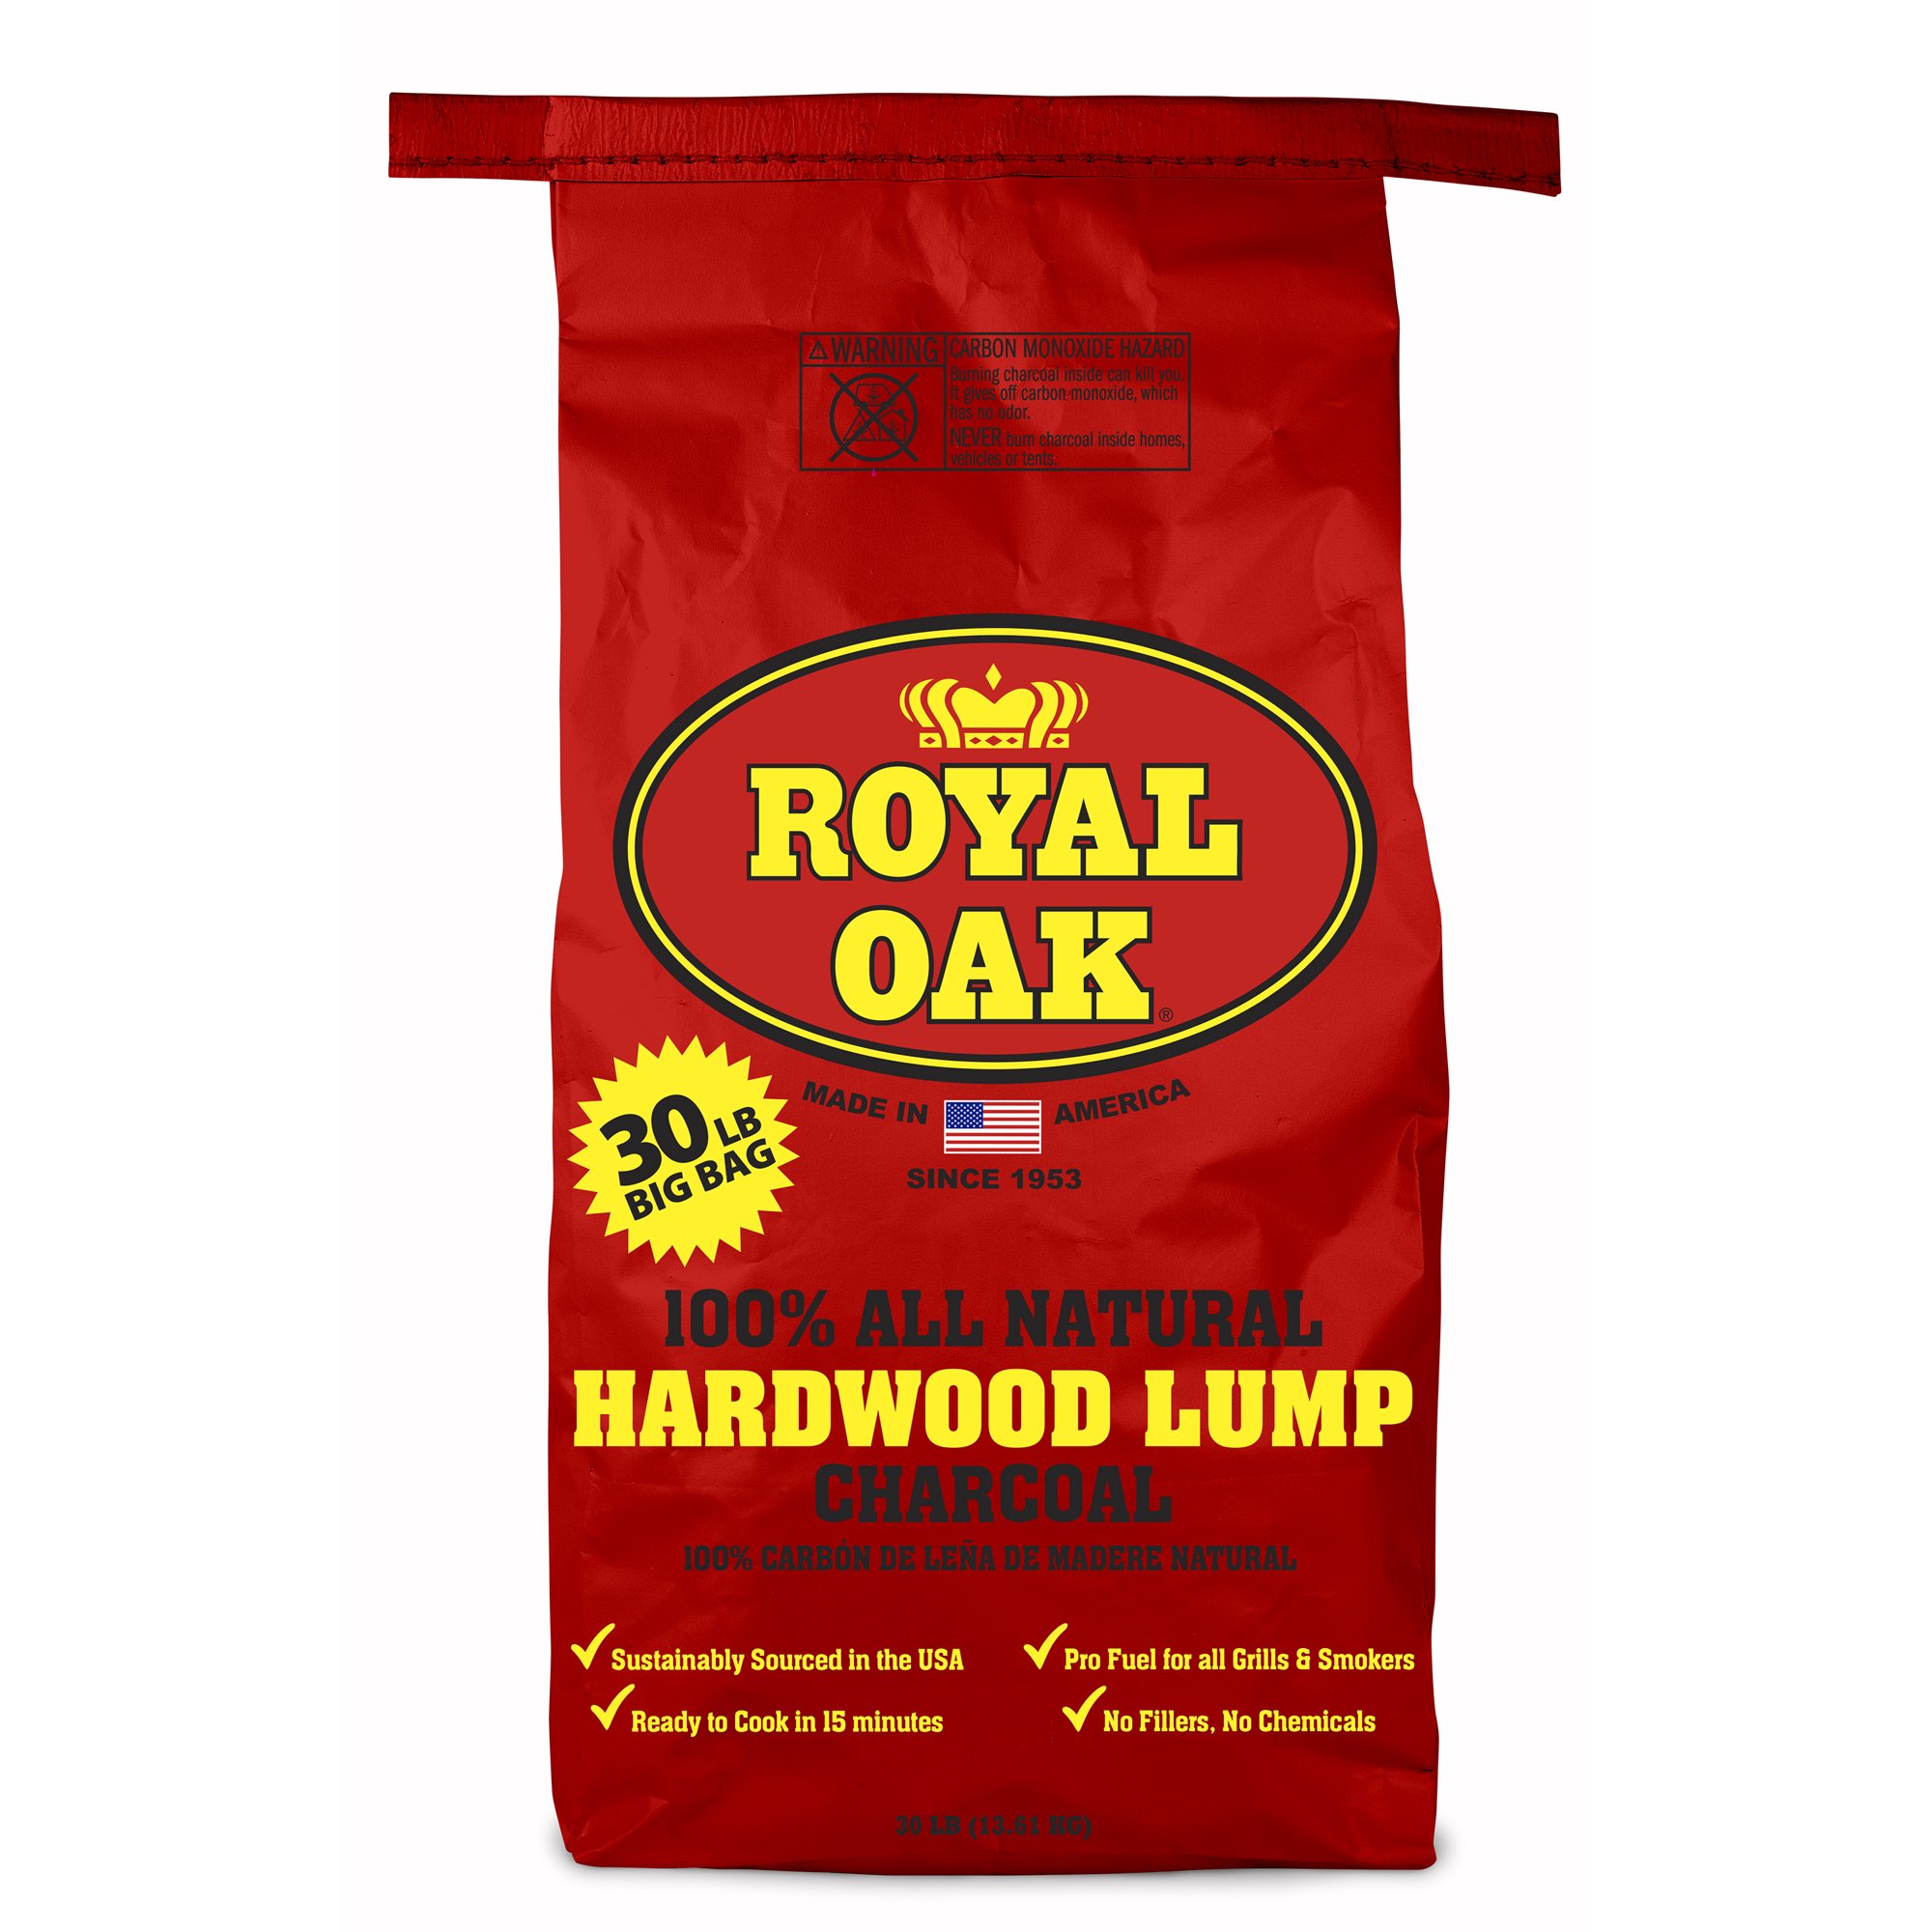 Royal Oak All Natural Hardwood Lump Charcoal $15/30lb bag (YMMV)